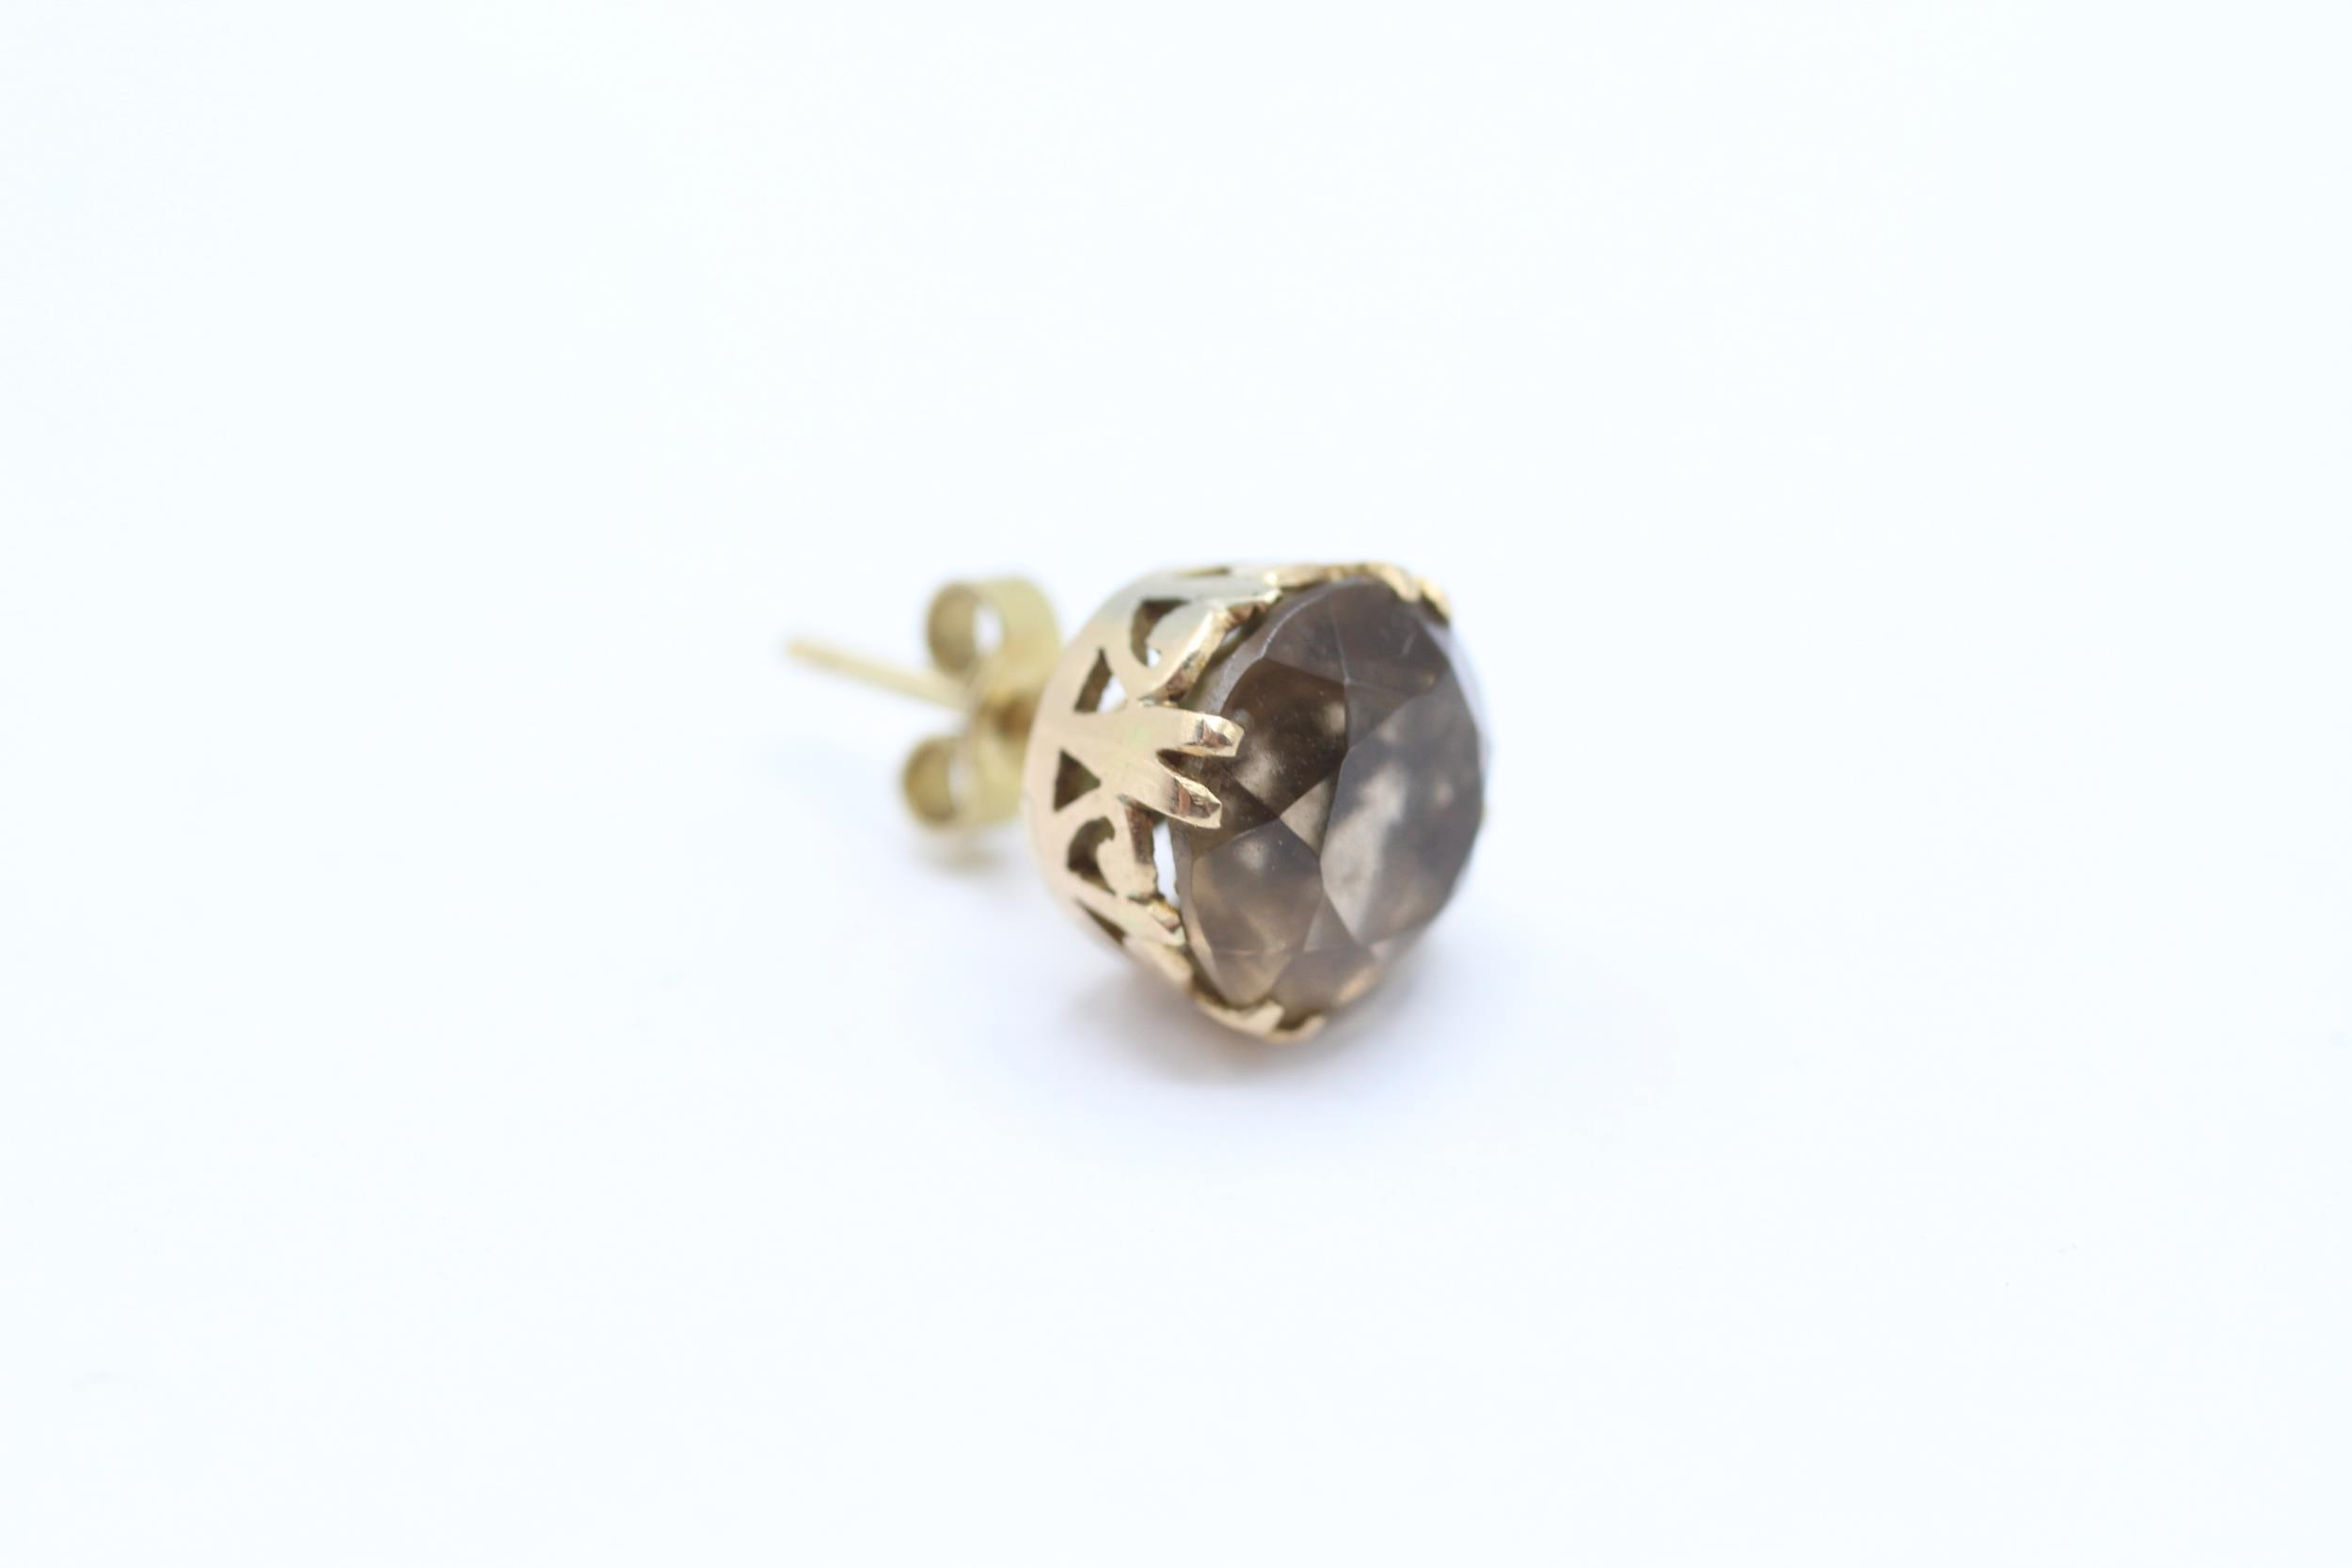 9ct gold smokey quartz stud earrings - 3.6 g - Image 2 of 4